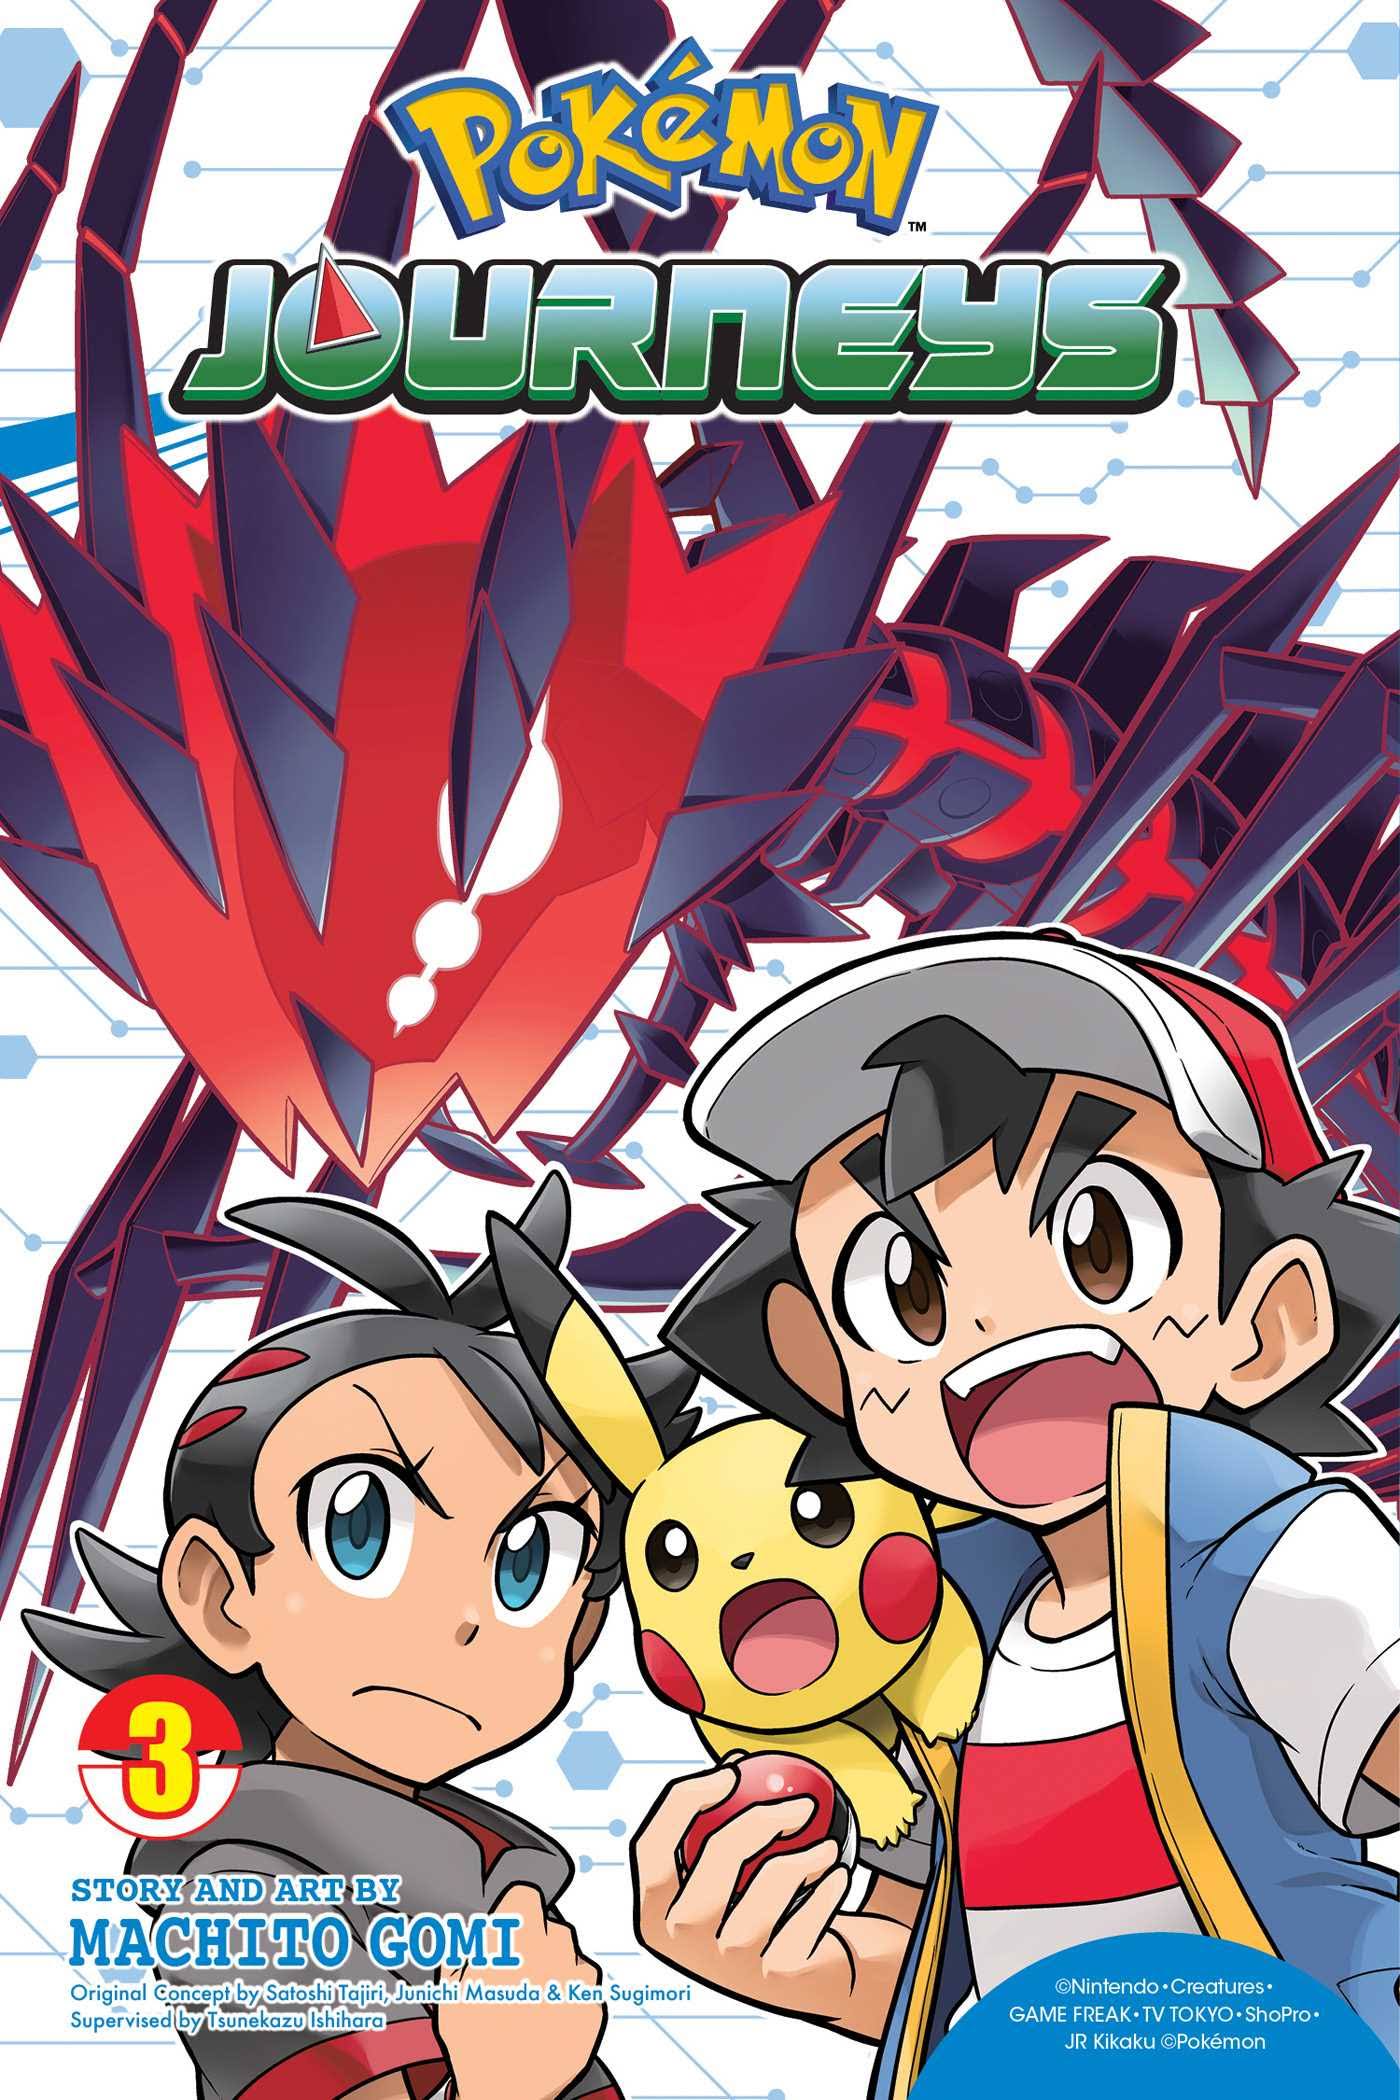 Pokémon Journeys, Vol. 3 [Book]